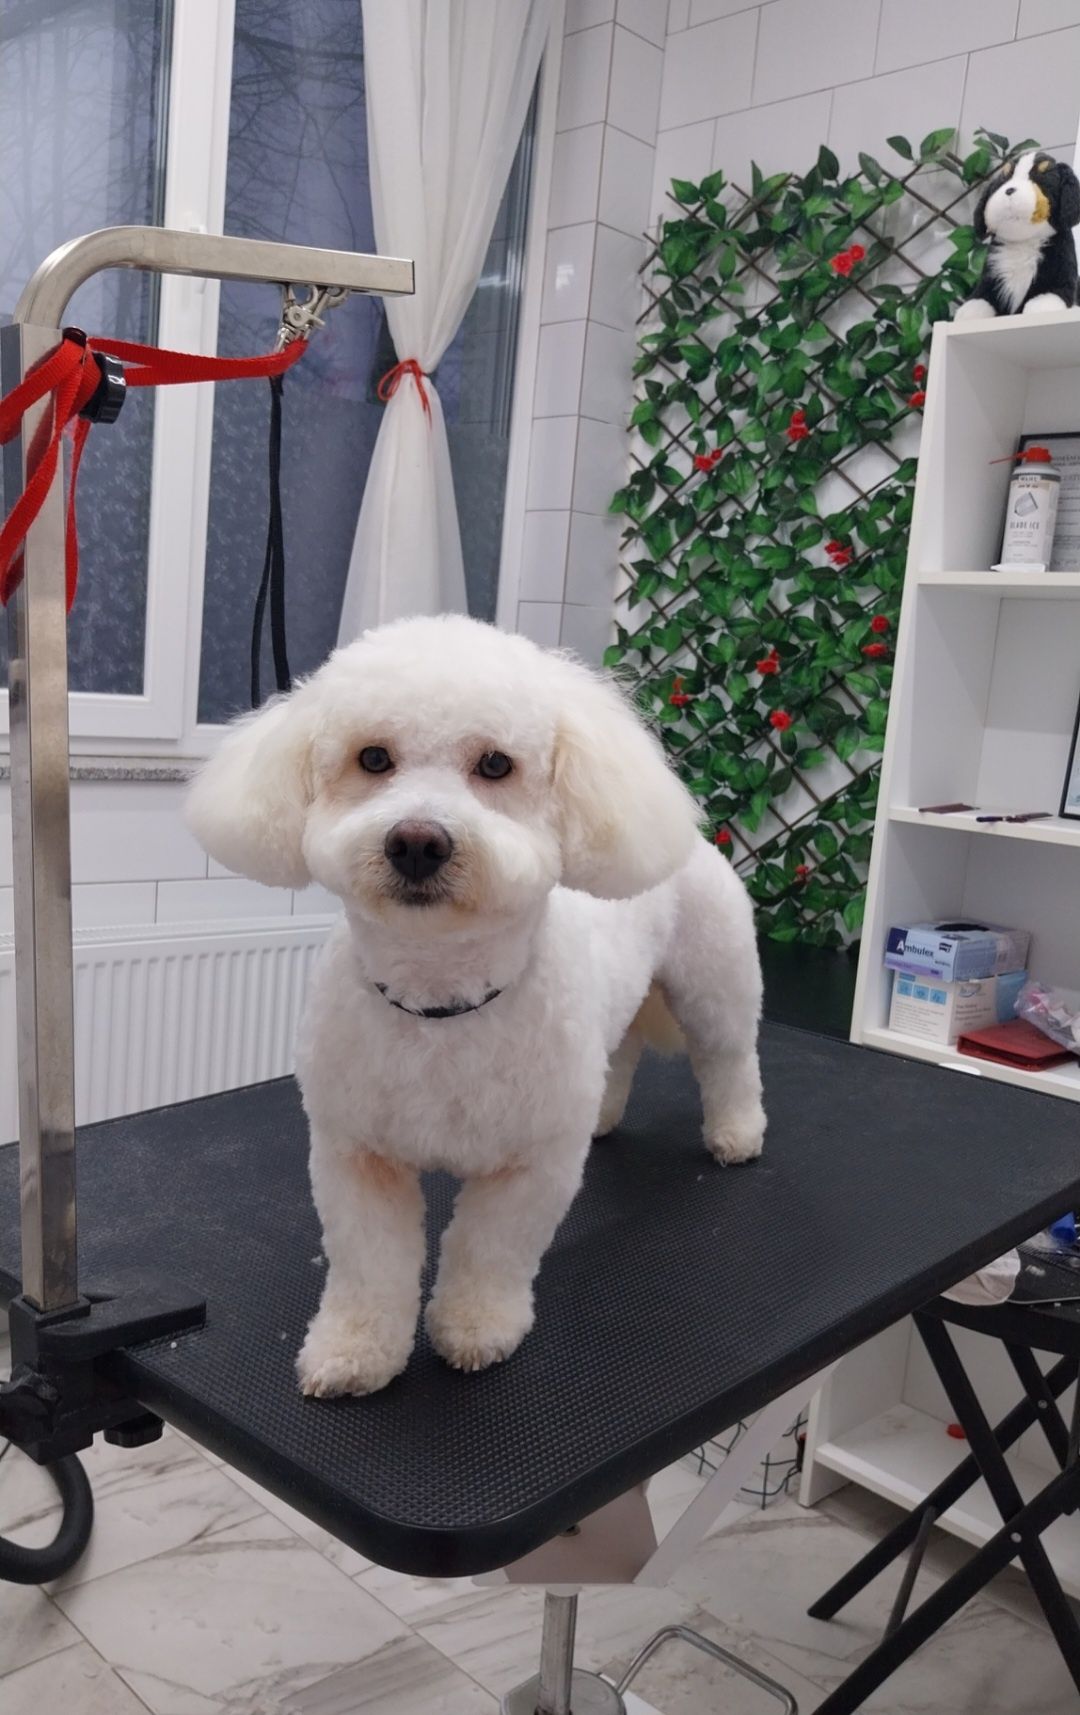 Coafura-Frizerie Canină in Sânmartin Mirific Pet Salon 80 lei